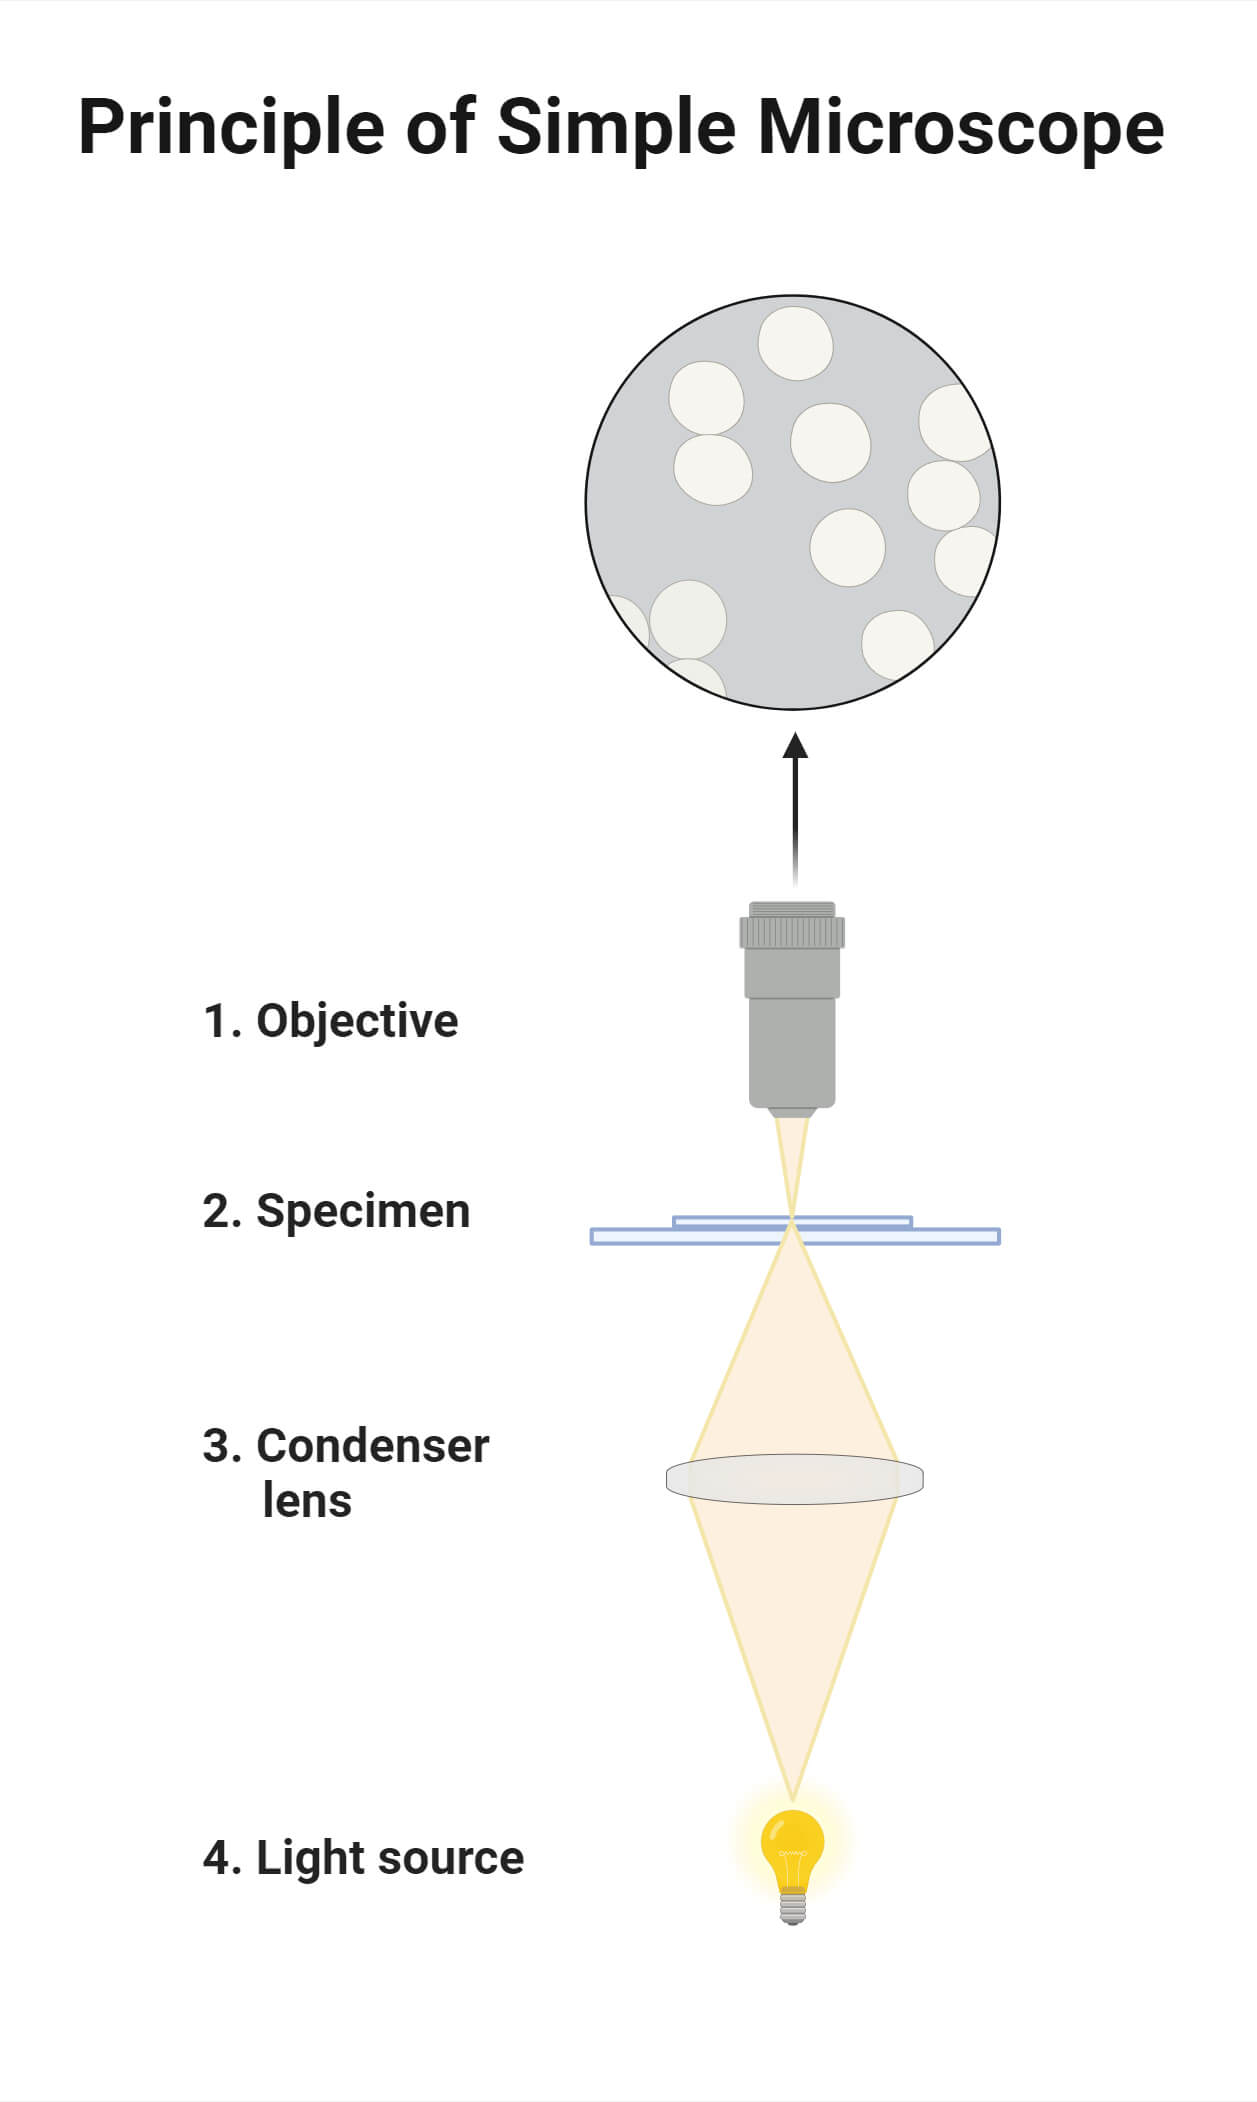 Principle of Simple Microscope